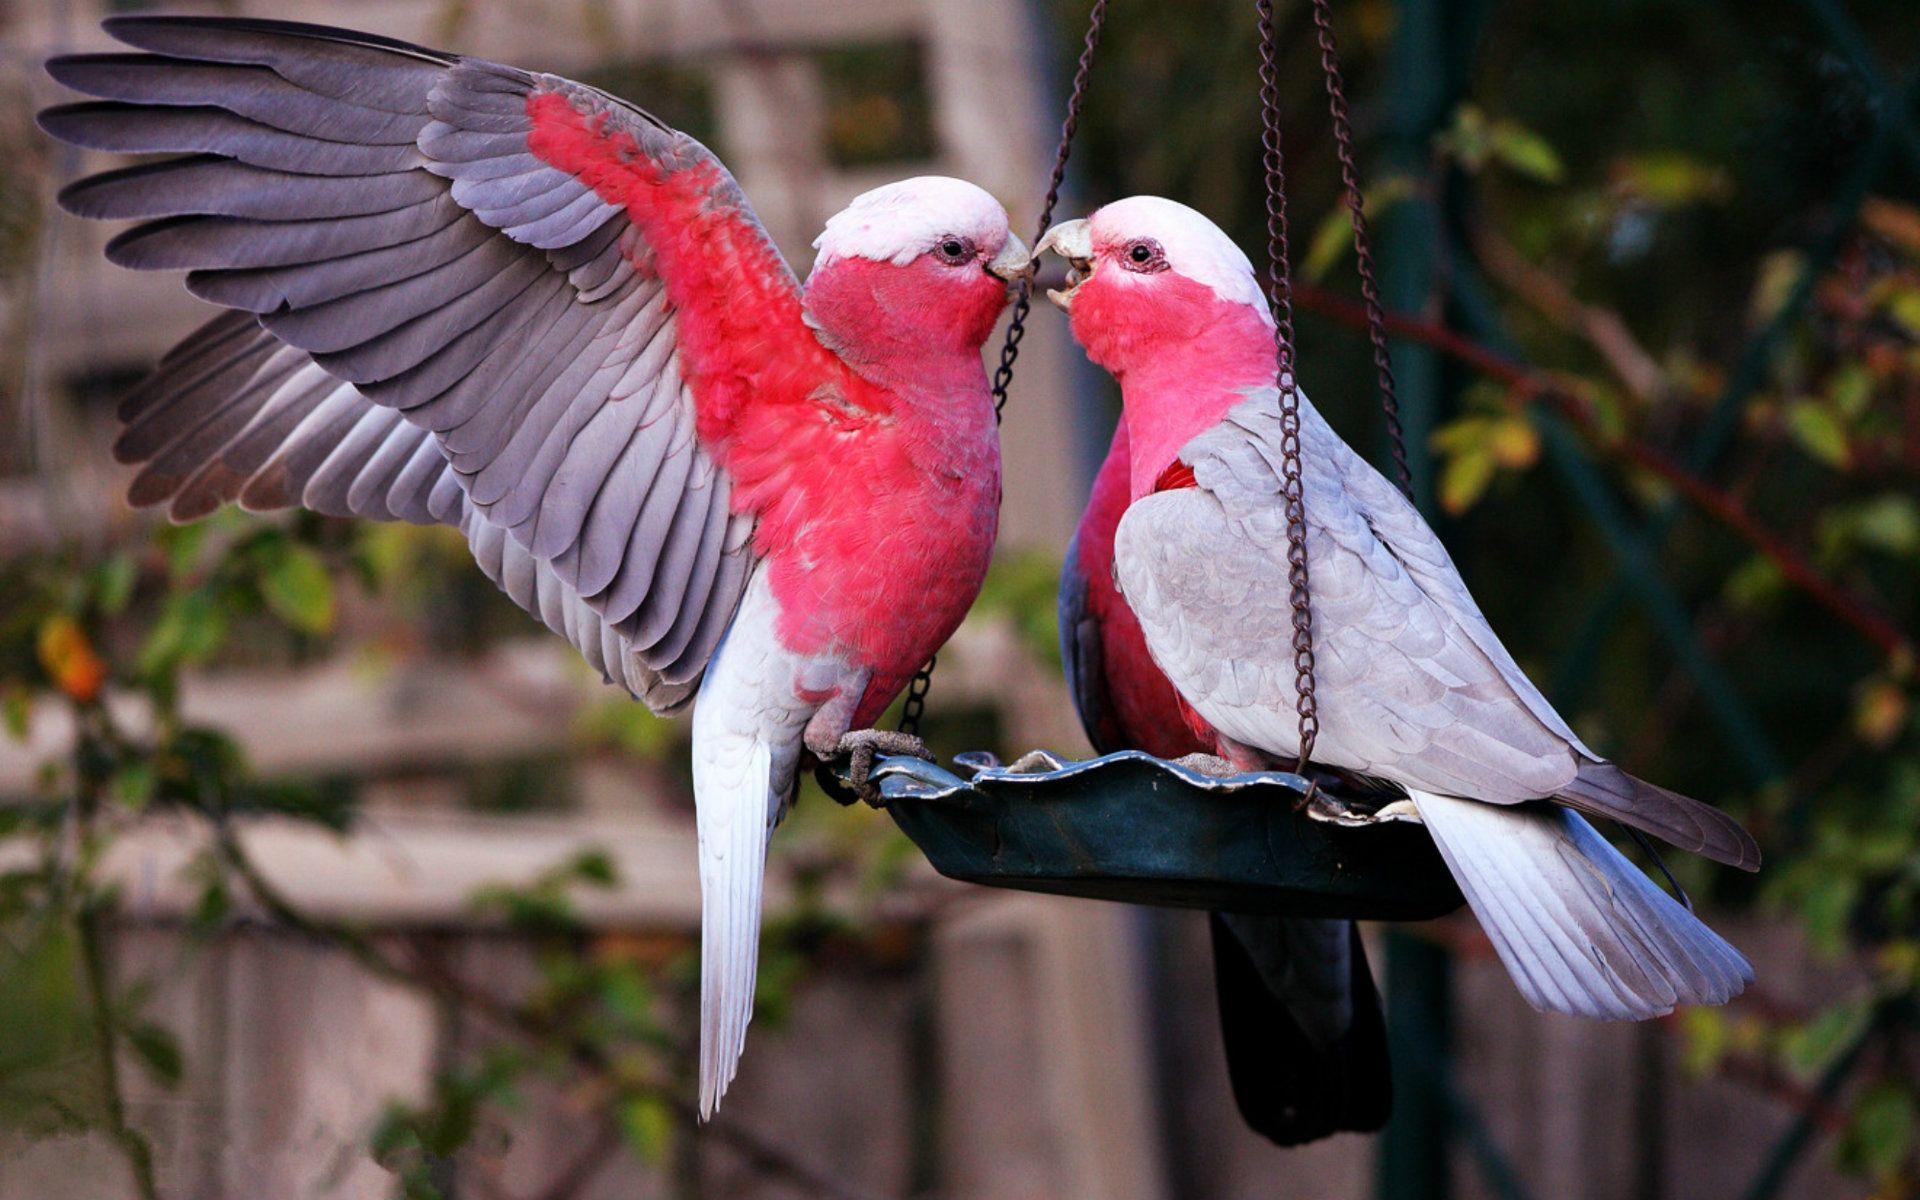 Amazing Photographs of Cute Love Birds (20 Pics)